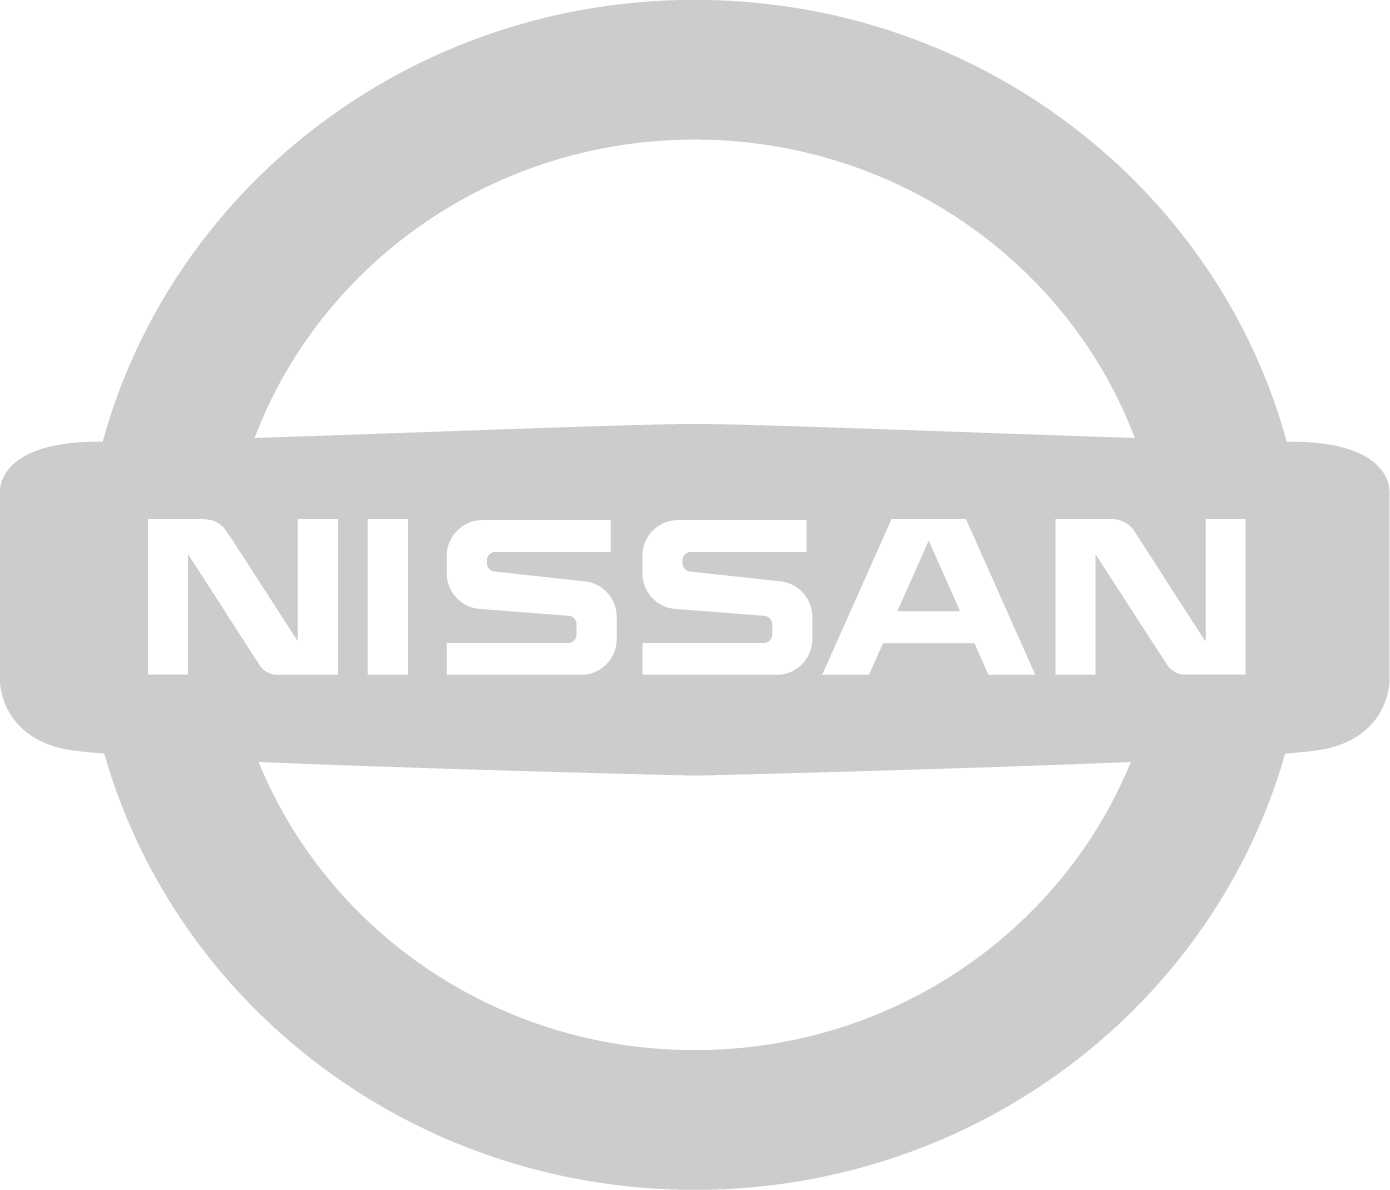 Nissan Image